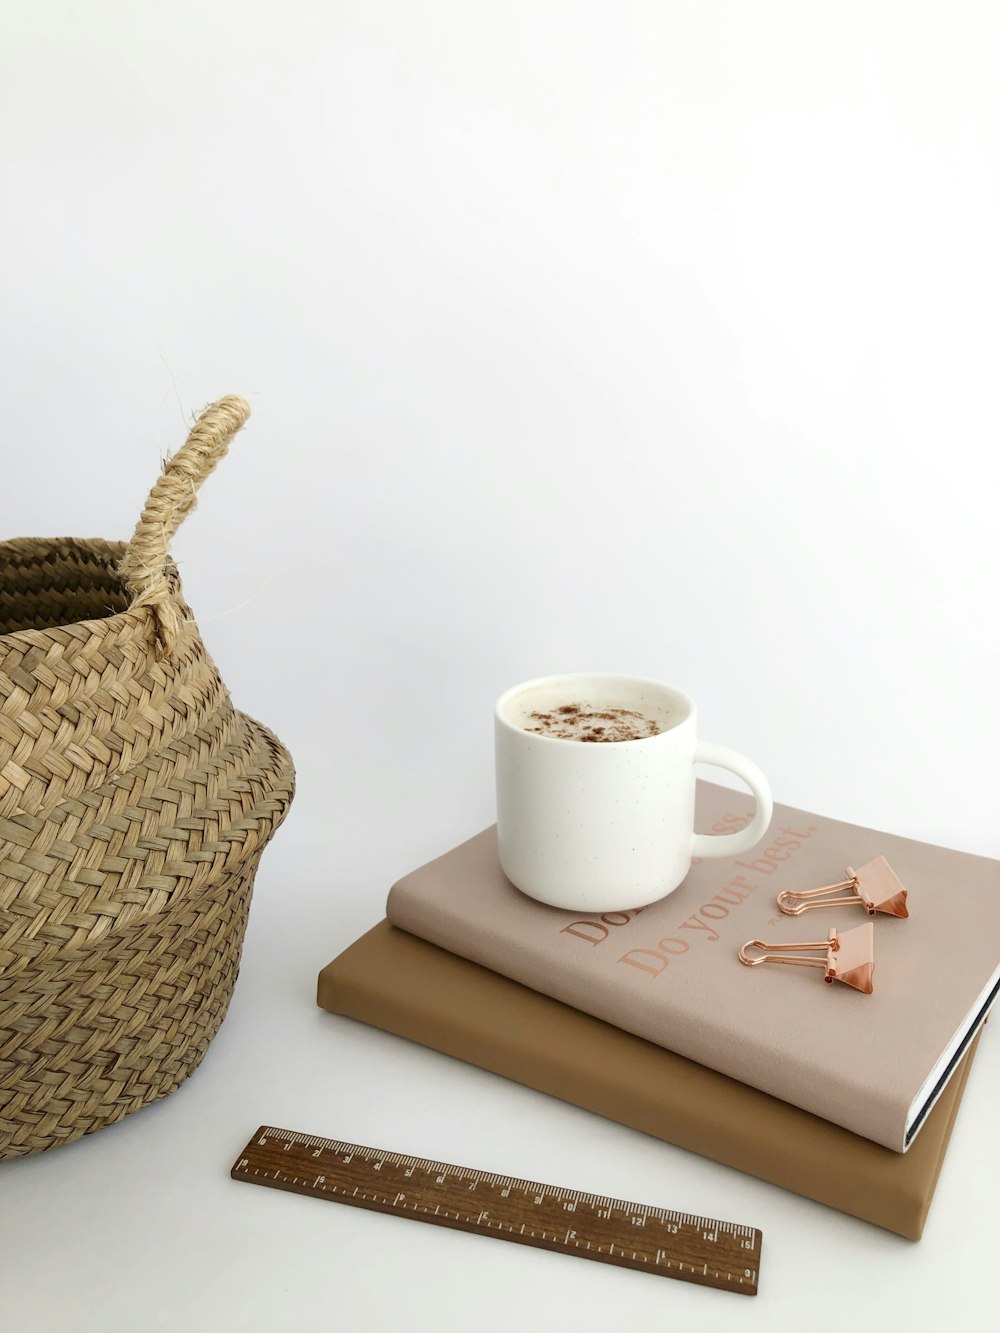 white ceramic mug on white book beside brown woven basket